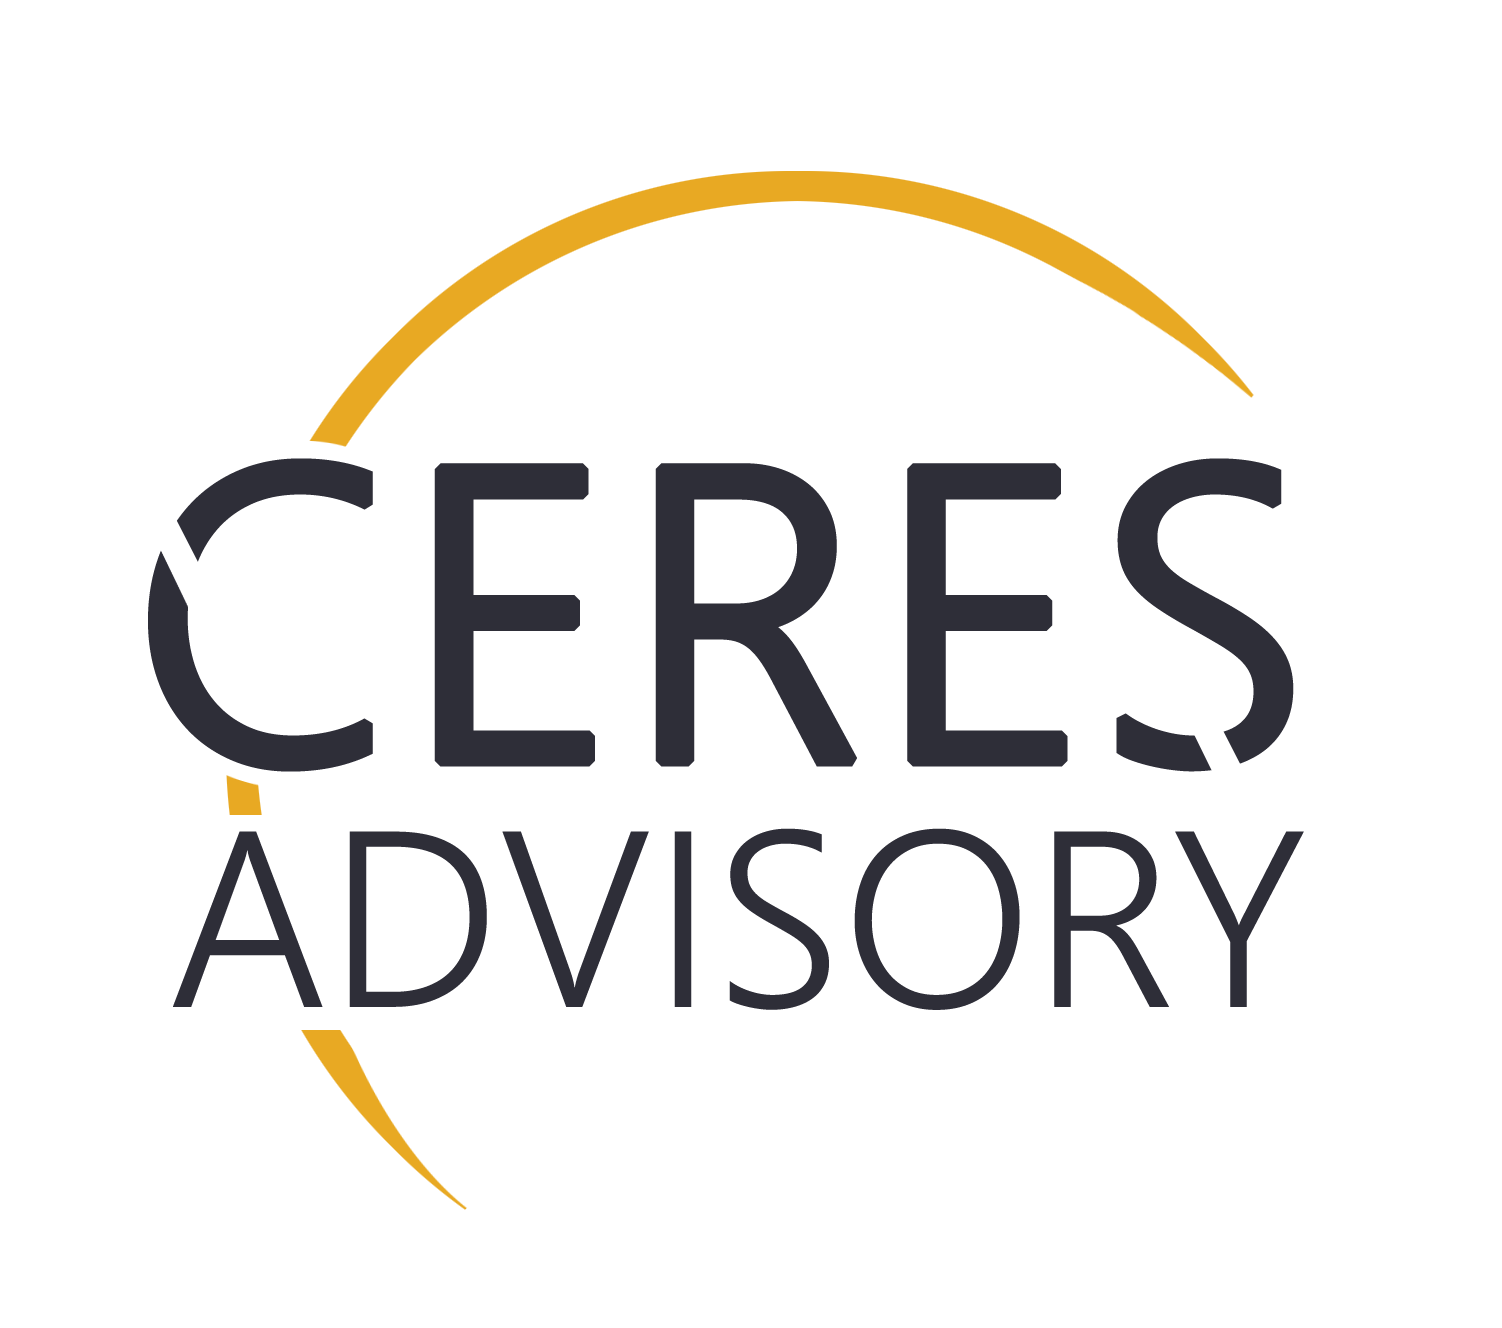 Ceres Advisory